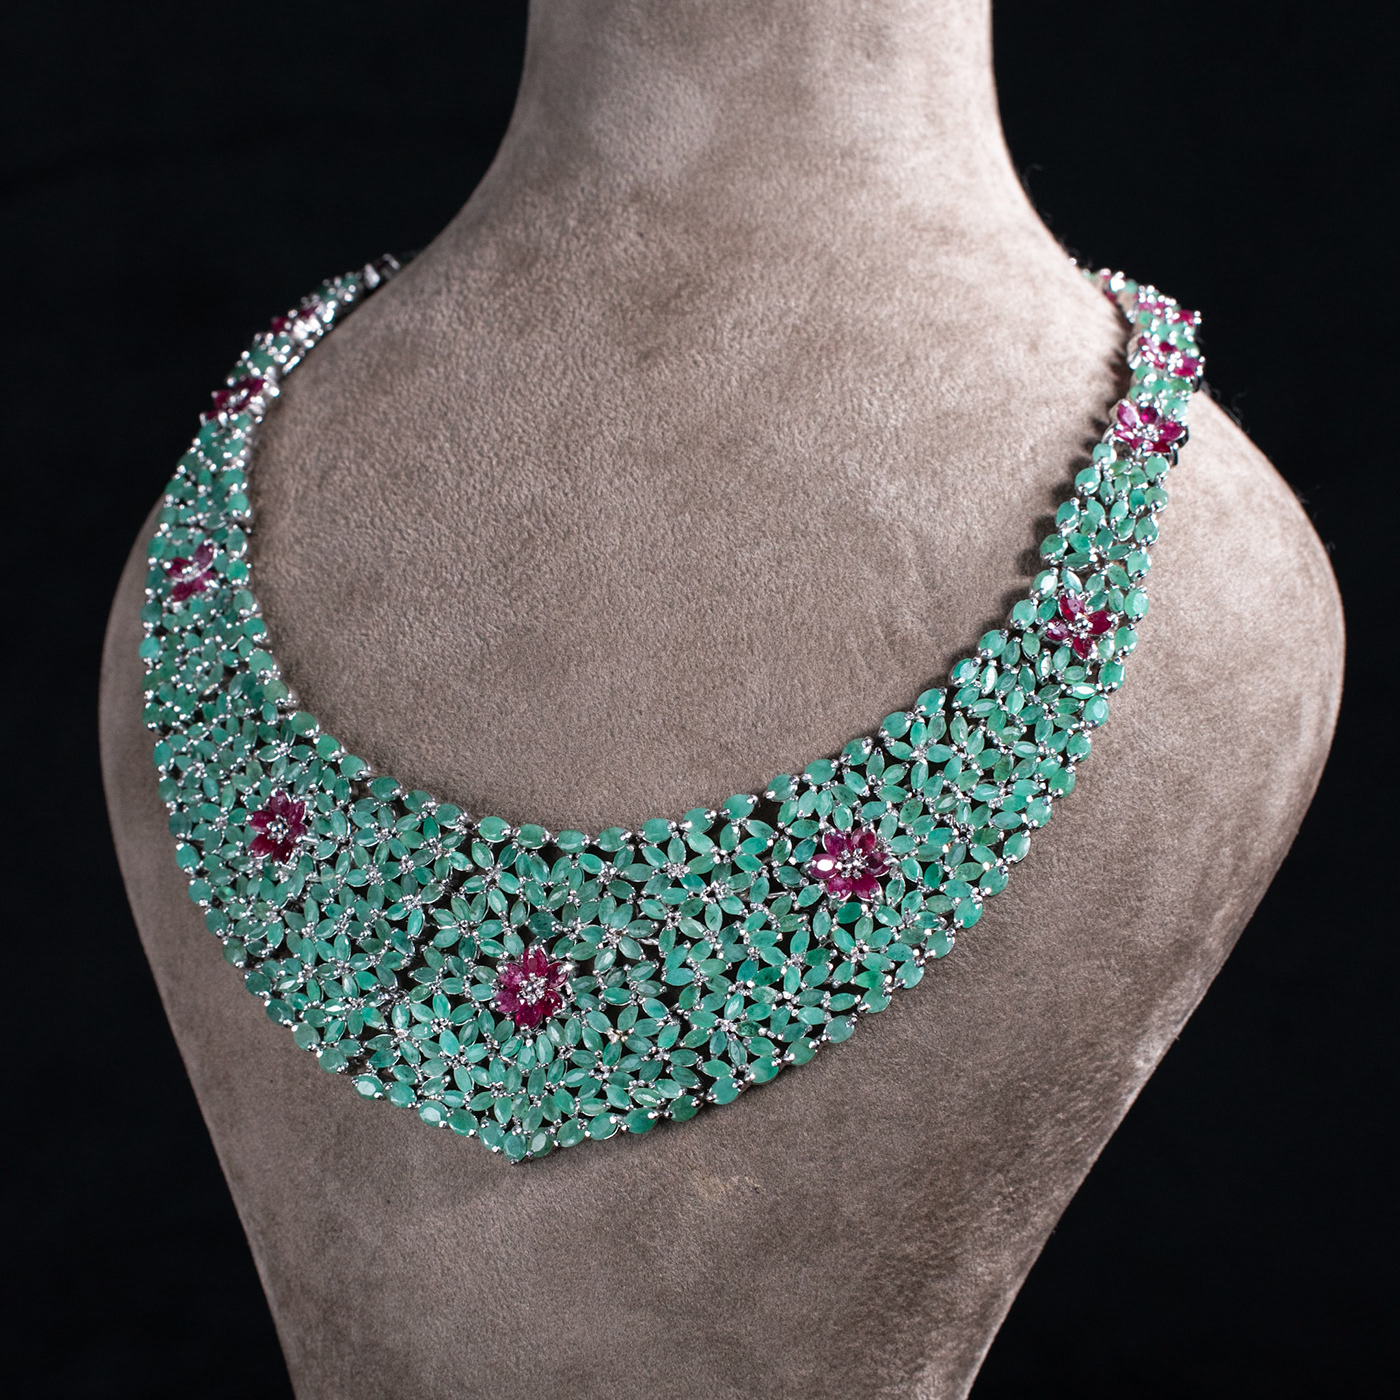 chile collares Fashion  FotografiaModa moda Necklace piedras preciosas Precious stones